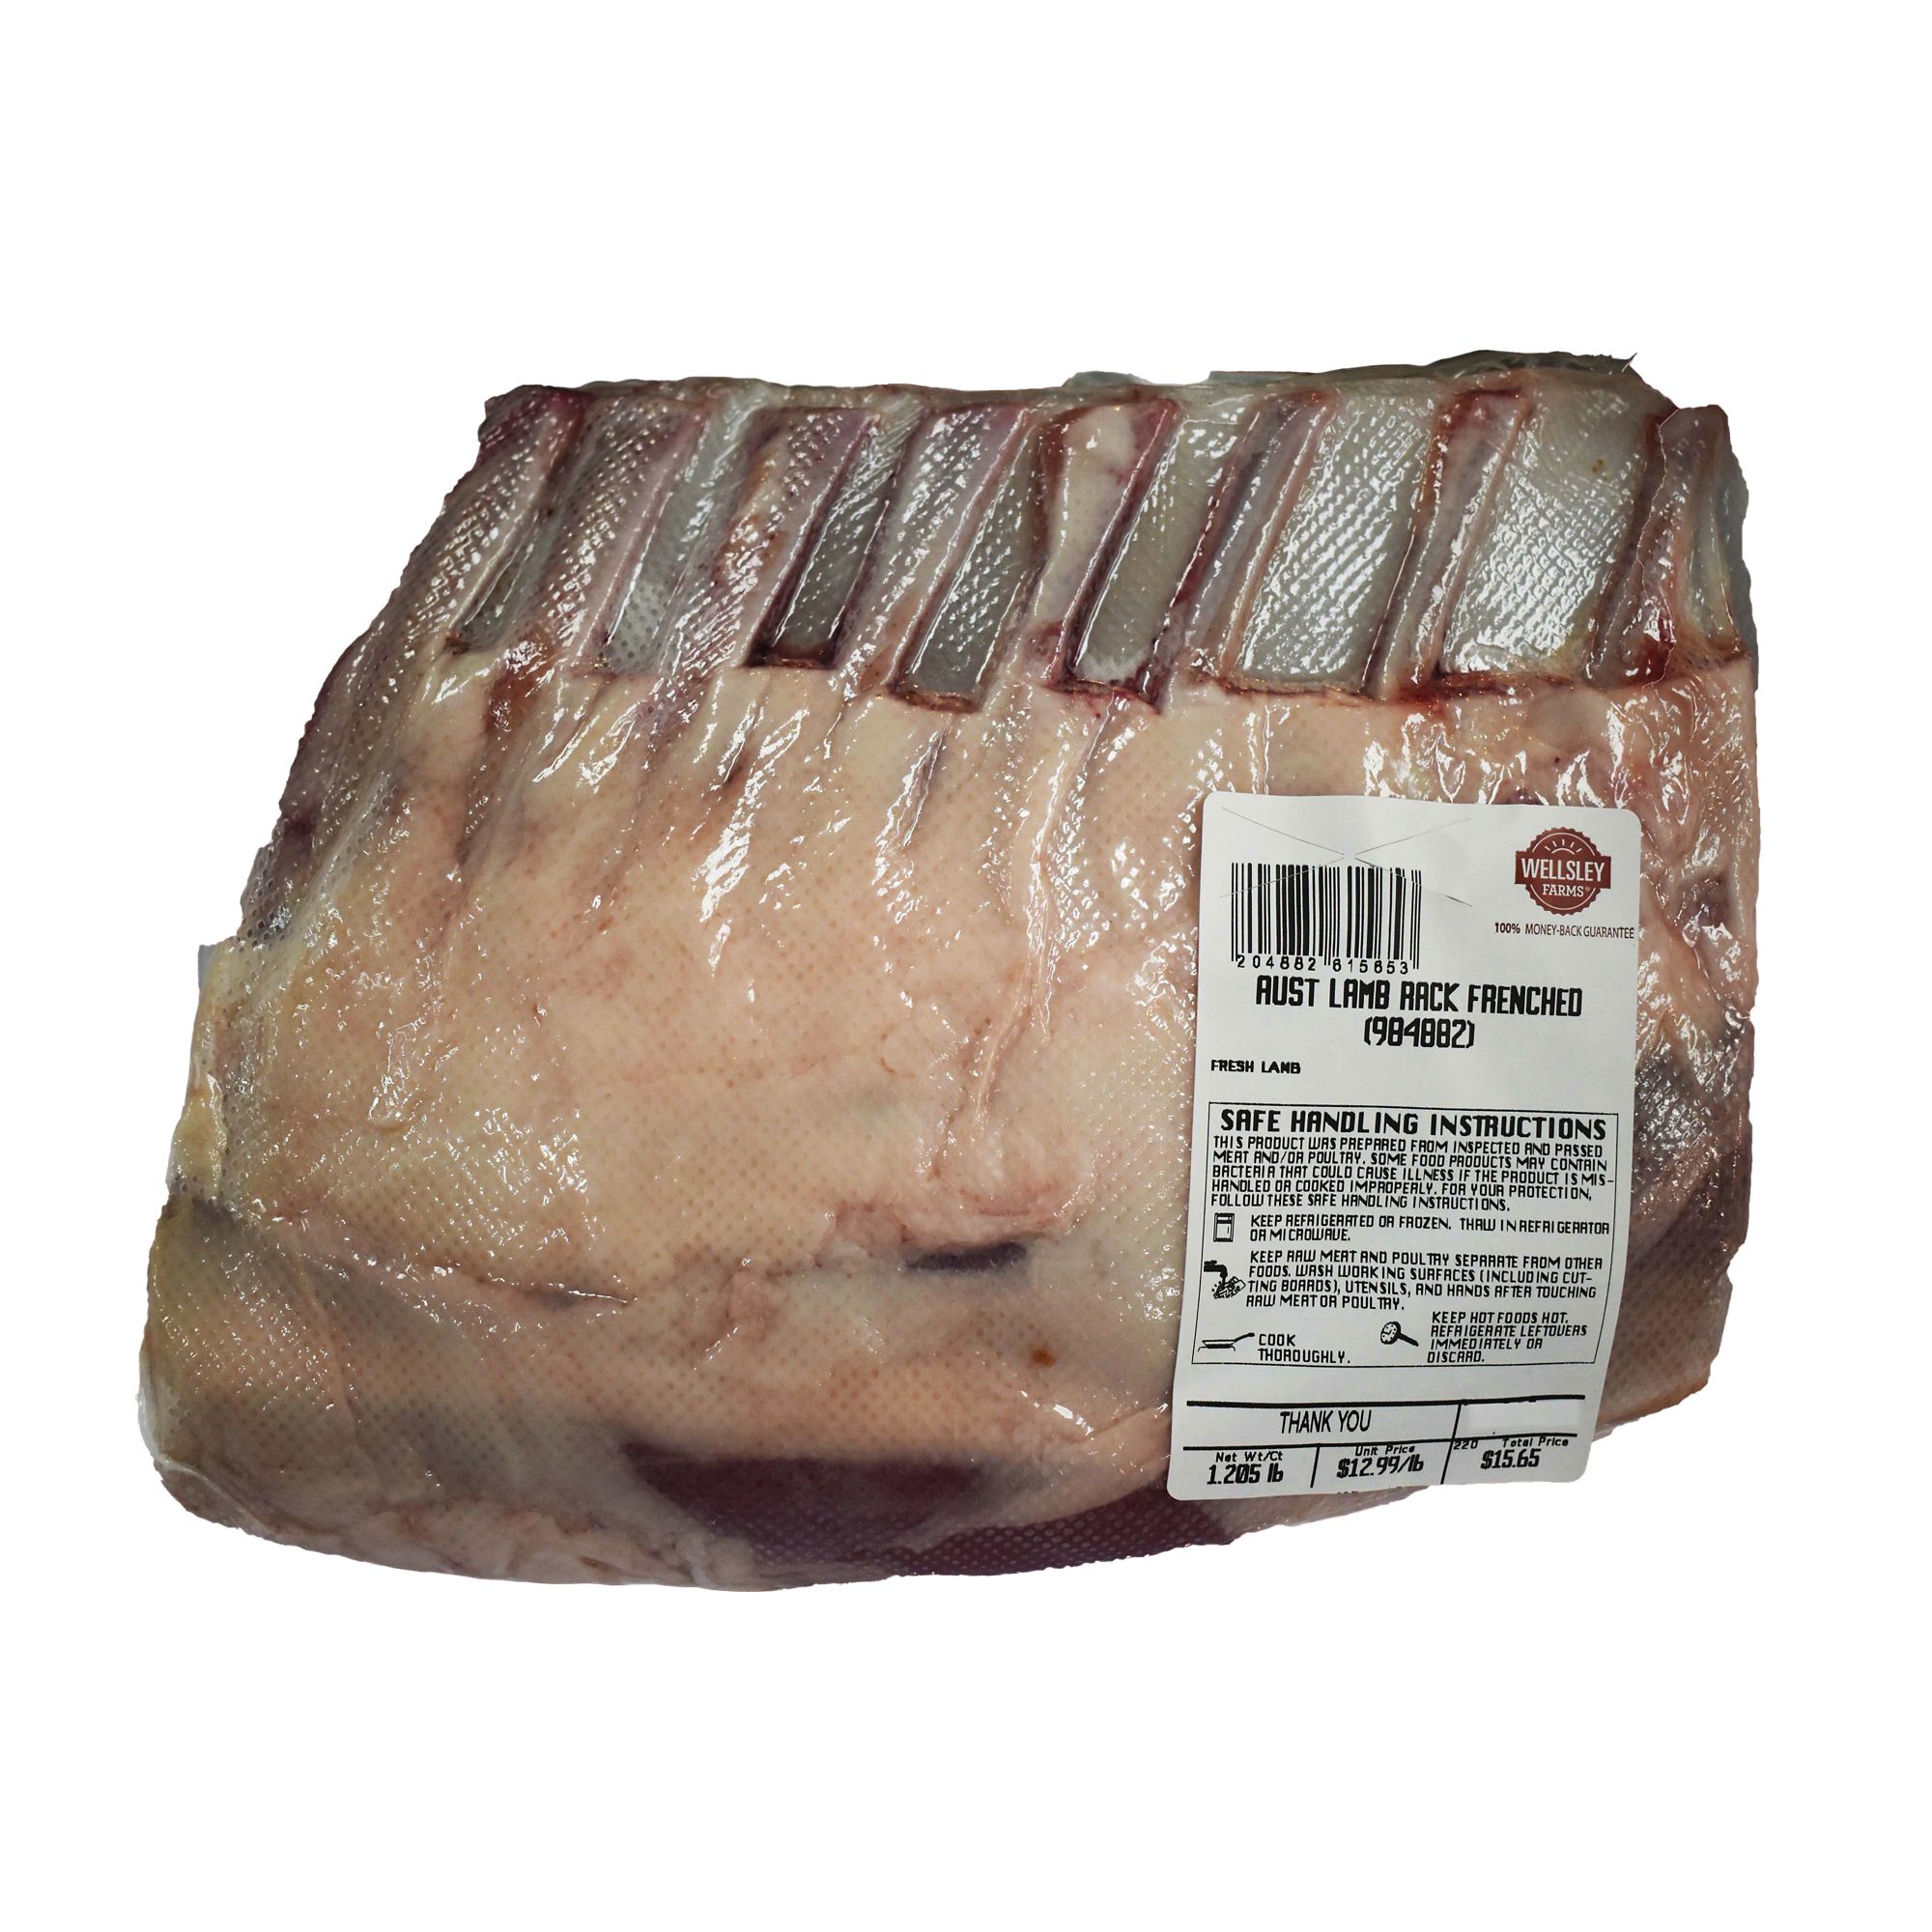 Australian Lamb Rib Rack Frenched, 1.25-2 lbs.